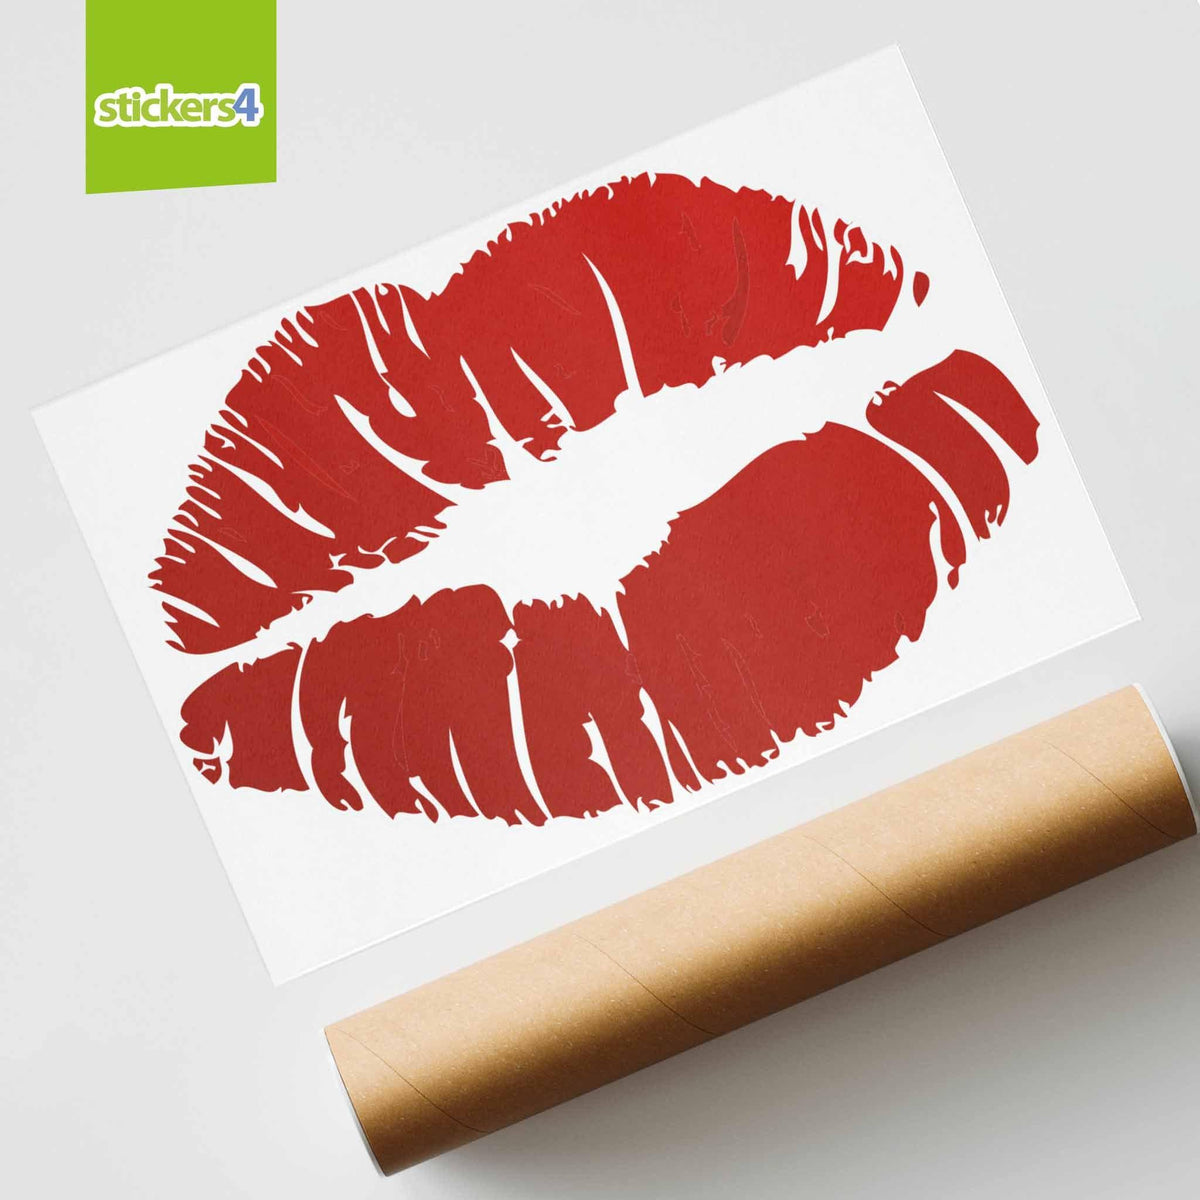 Kissy Lipstick Lips Window Sticker